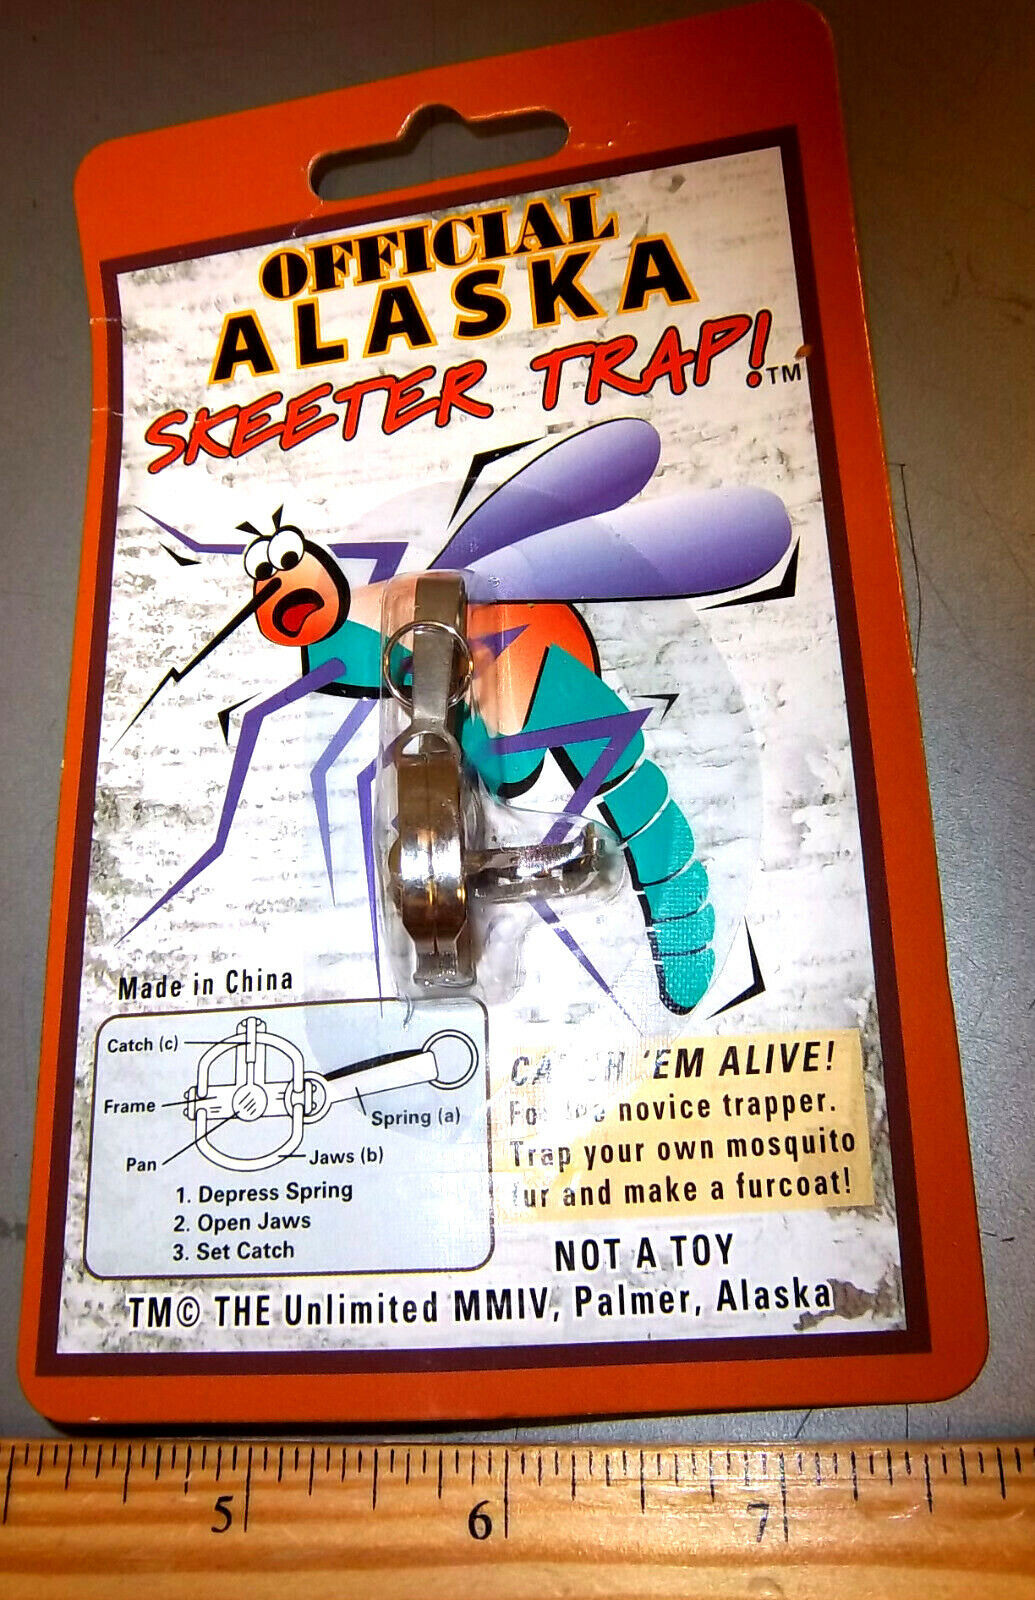 Official Alaska Skeeter Trap Catch em alive NOVELTY ITEM, Mosquito trap fun